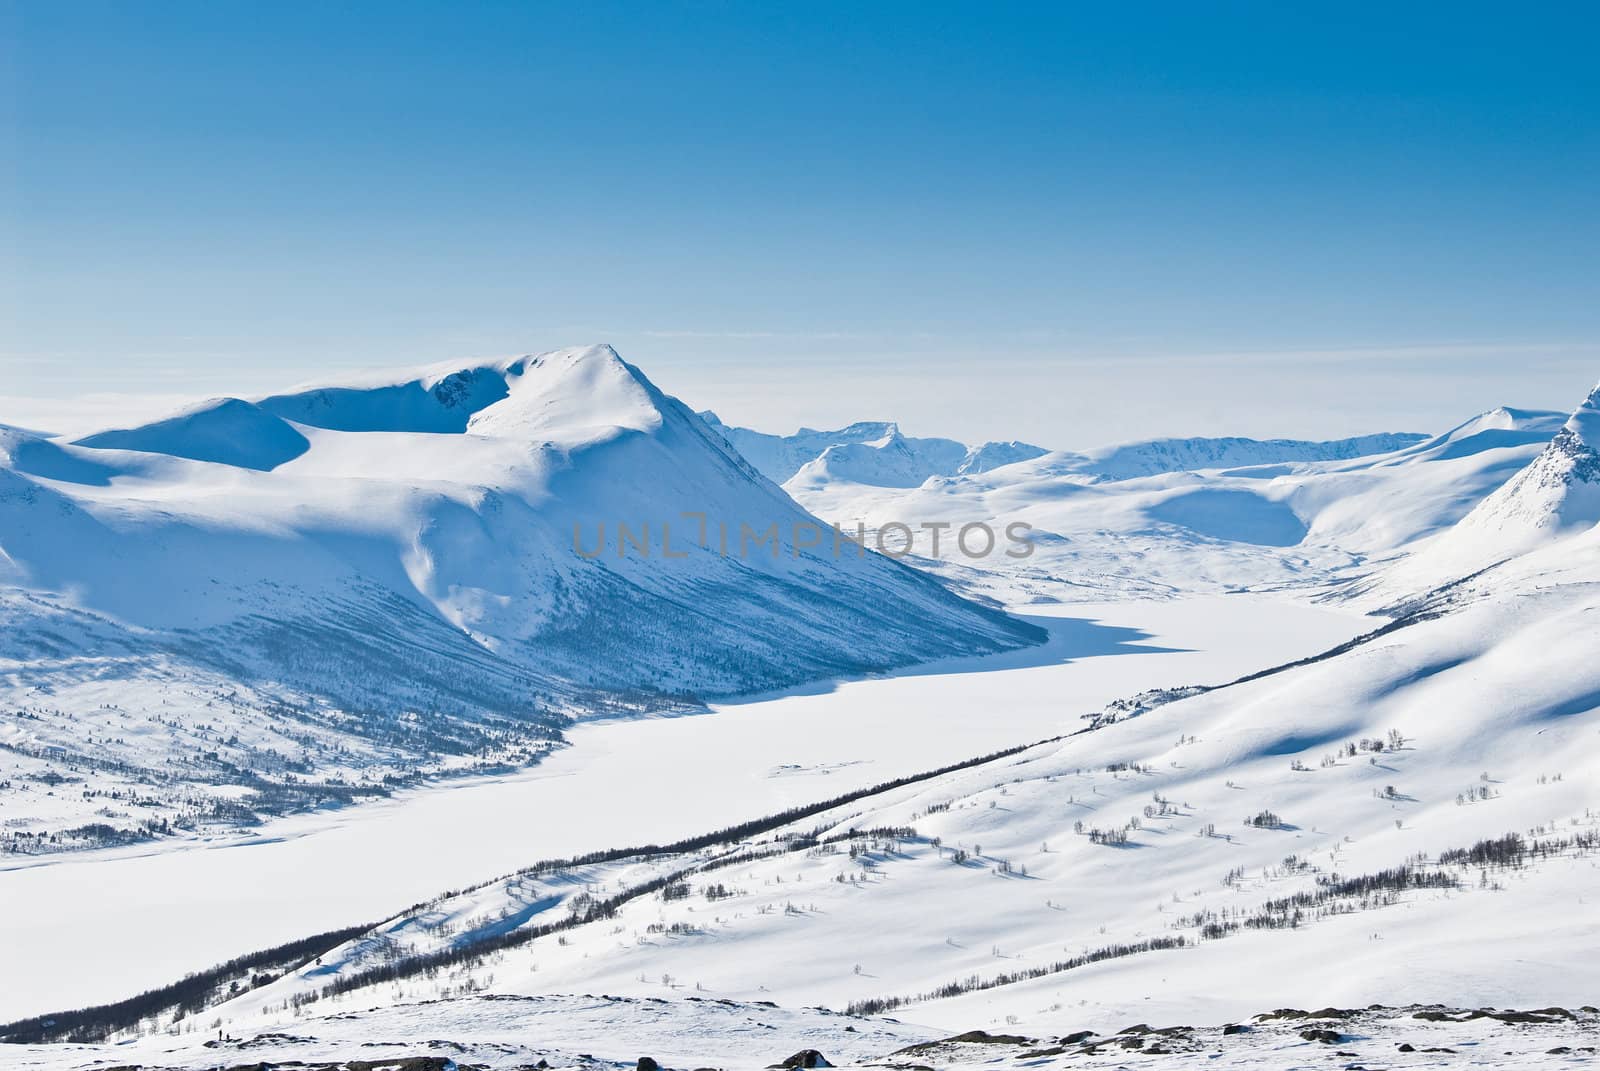 A snowy mountain landscape on a beautiful winter day. Picture taken in Oppdal, Norway, looking over Gjevillvatnet.